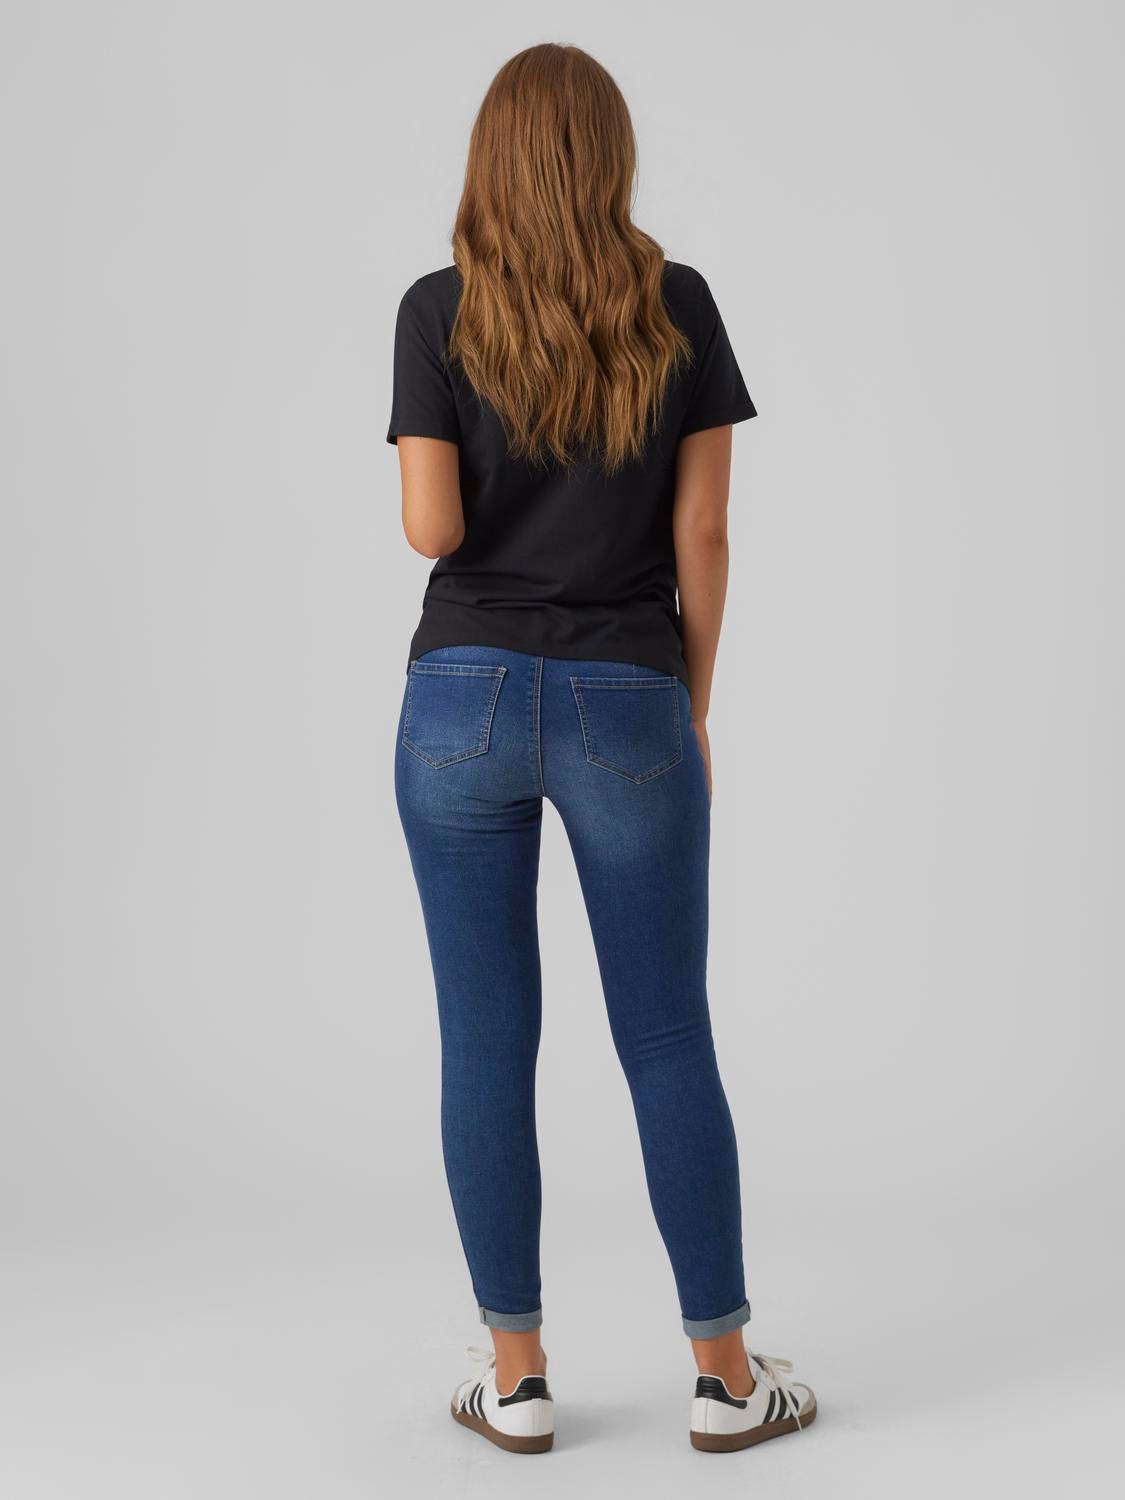 Low Jeans Fold waist Skinny Fit up hems